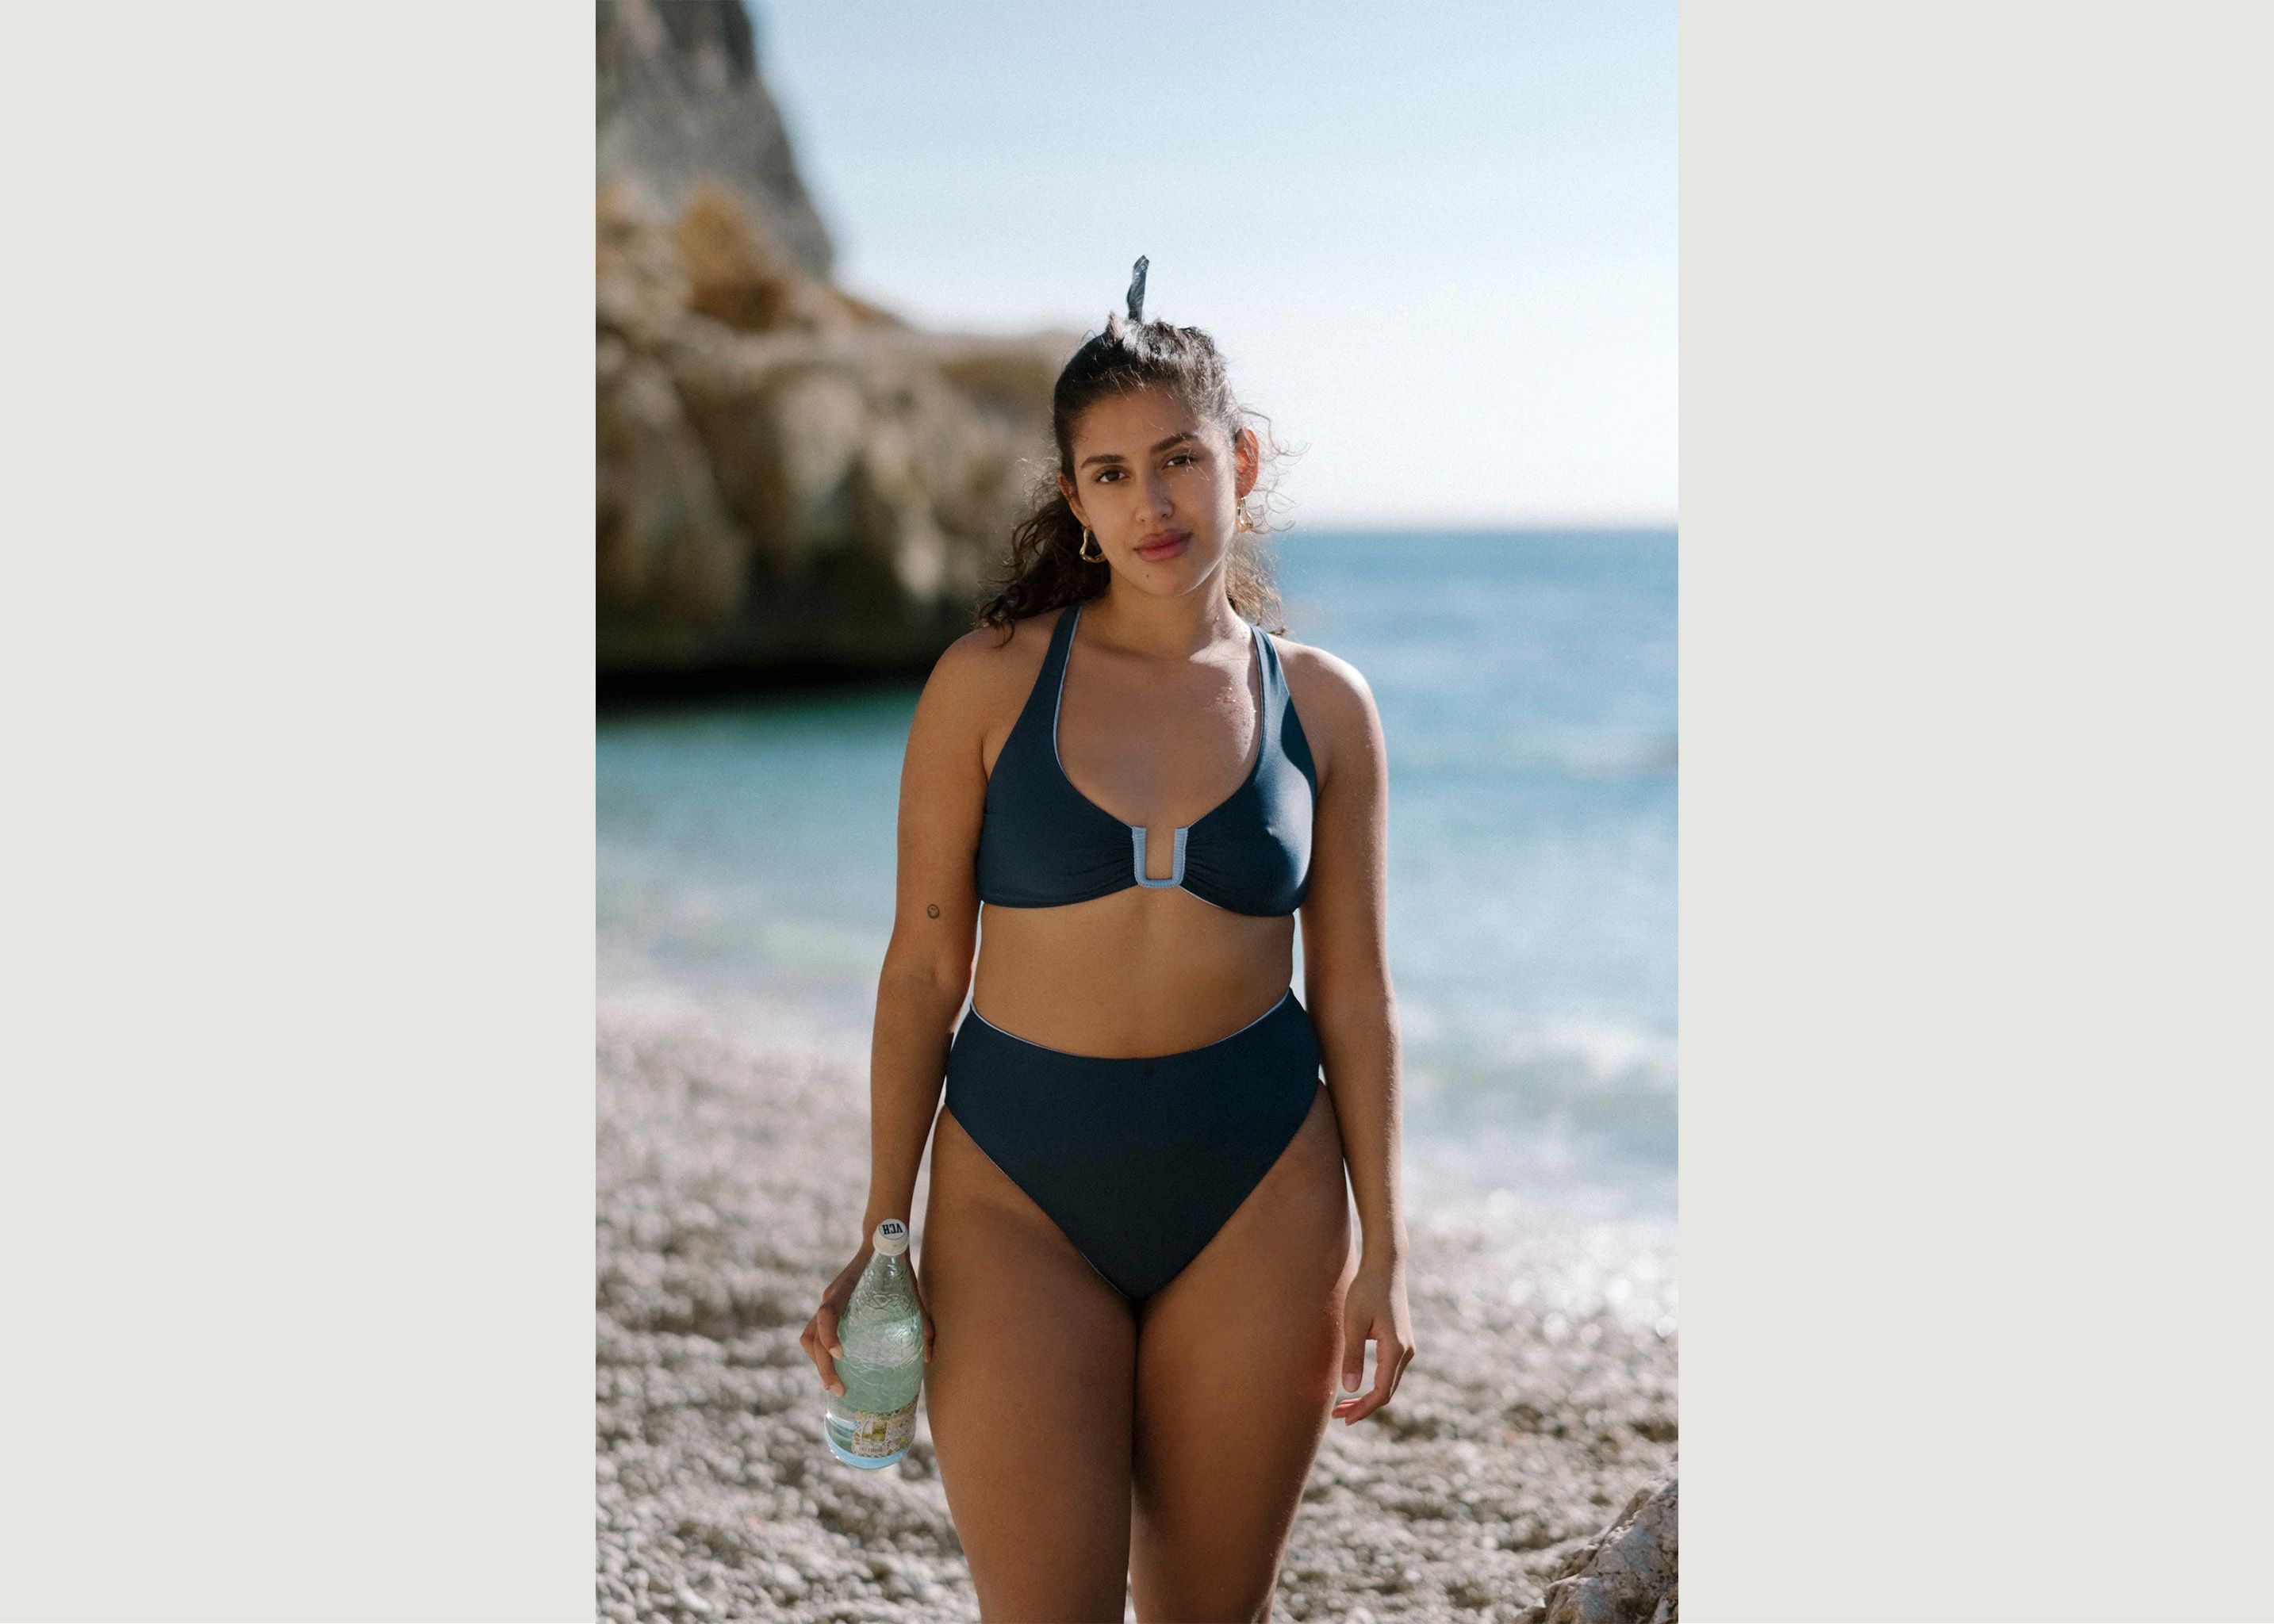 Tinos reversible bikini bottoms - Kaly Ora